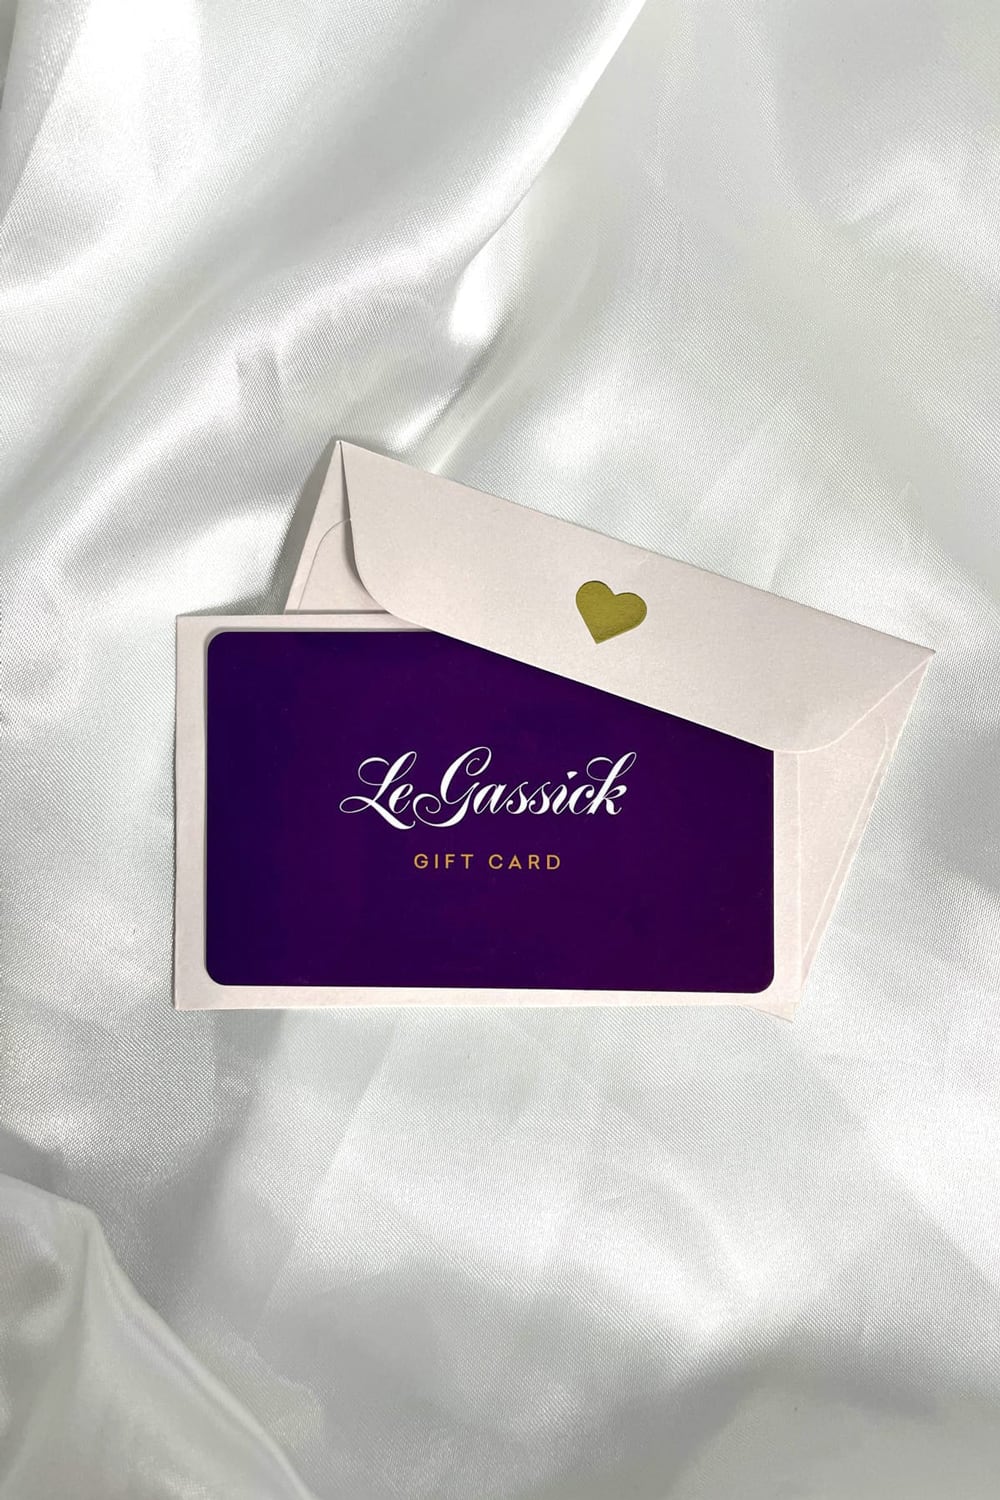 LeGassick Gift Card available at LeGassick Diamonds and Jewellery Gold Coast, Australia.